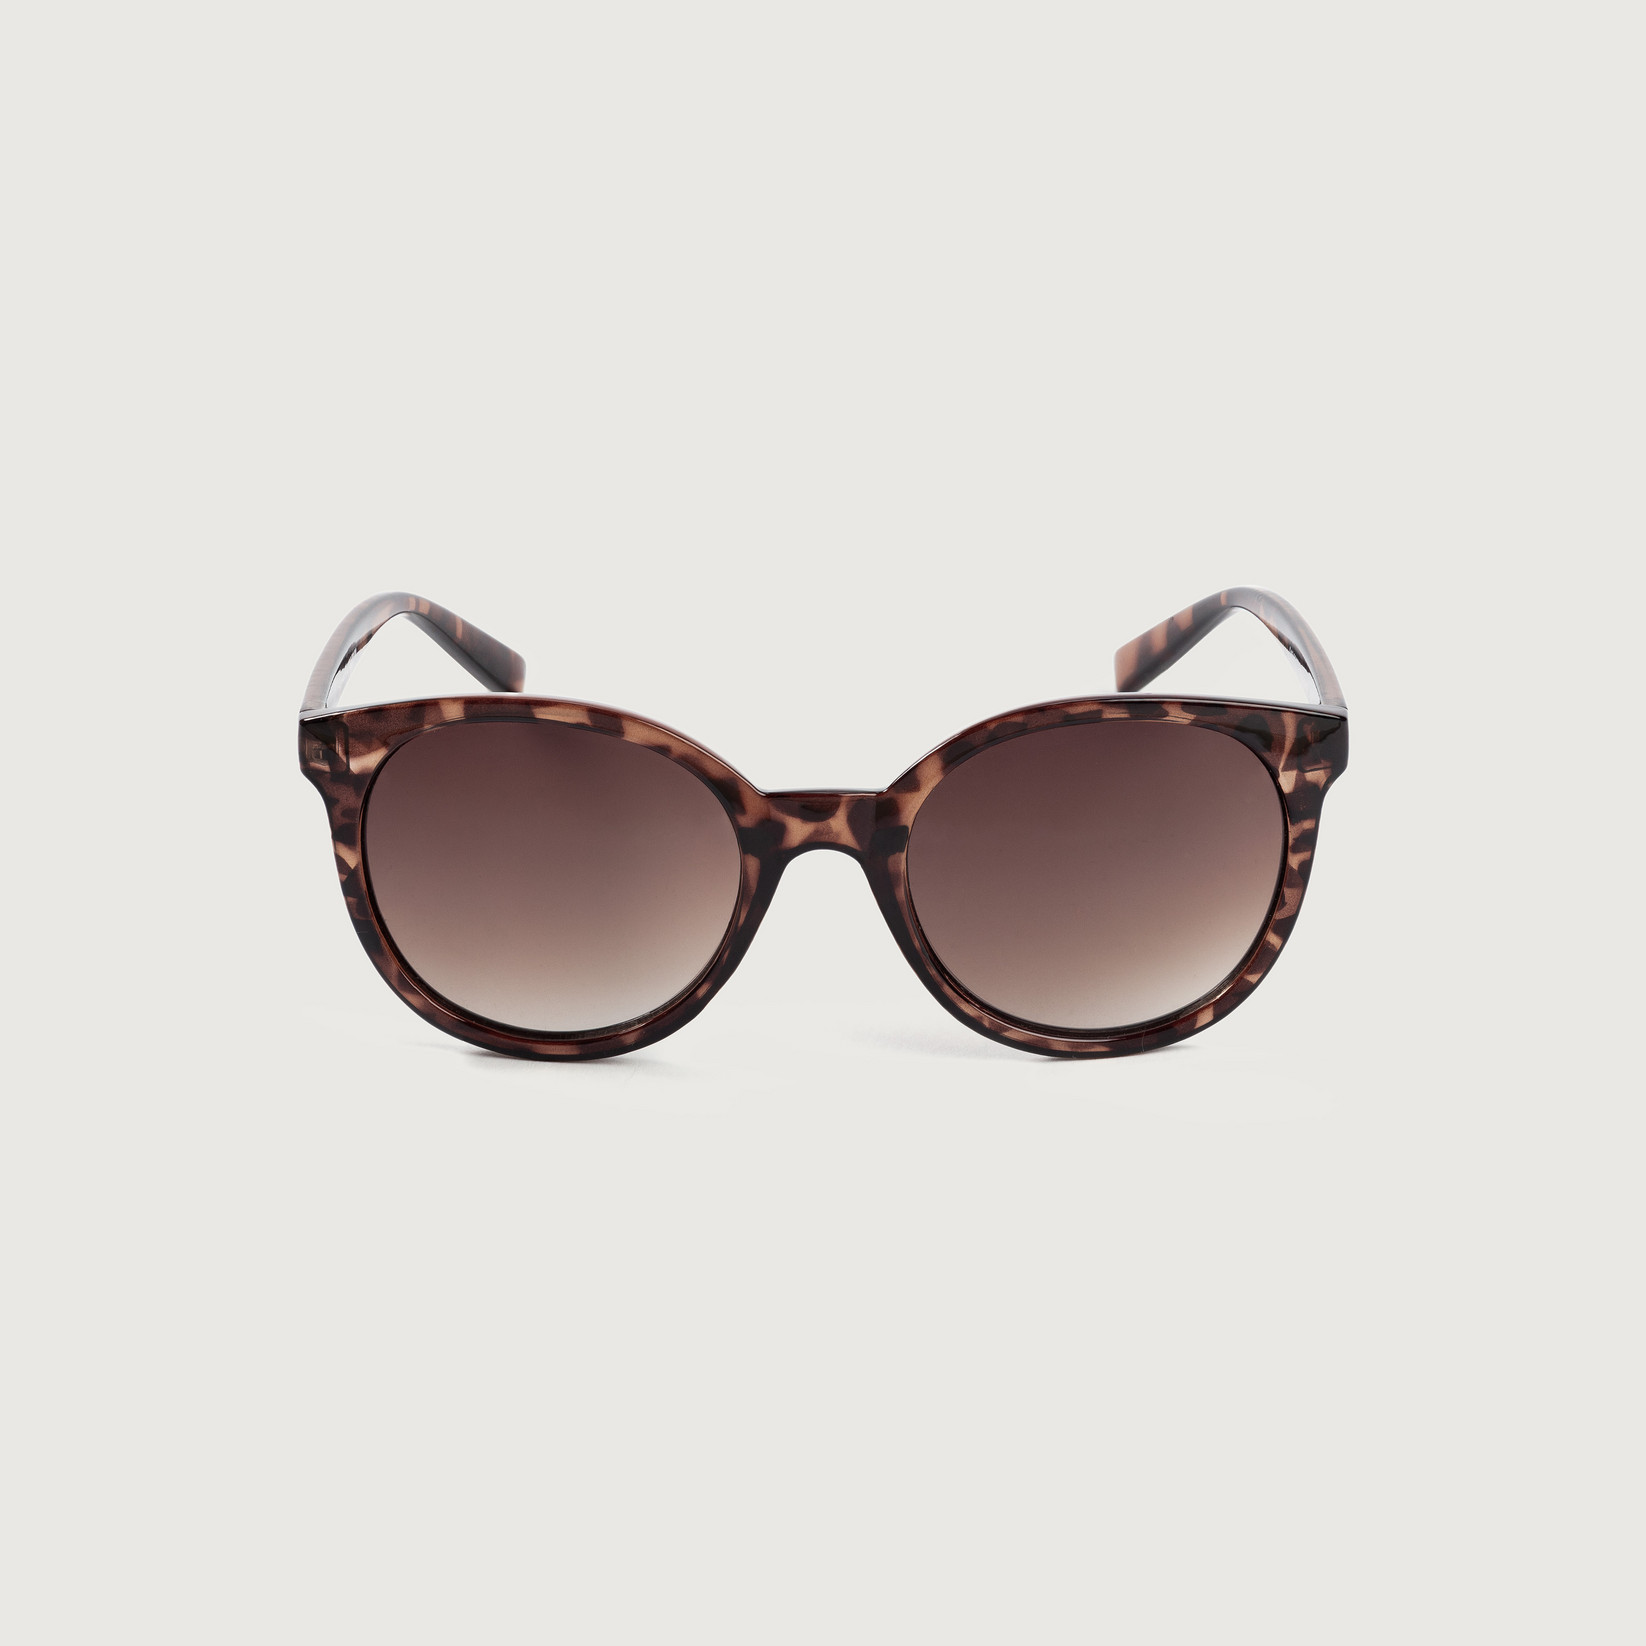 Hallhuber sunglasses in a tortoise optics cinnamon, one size